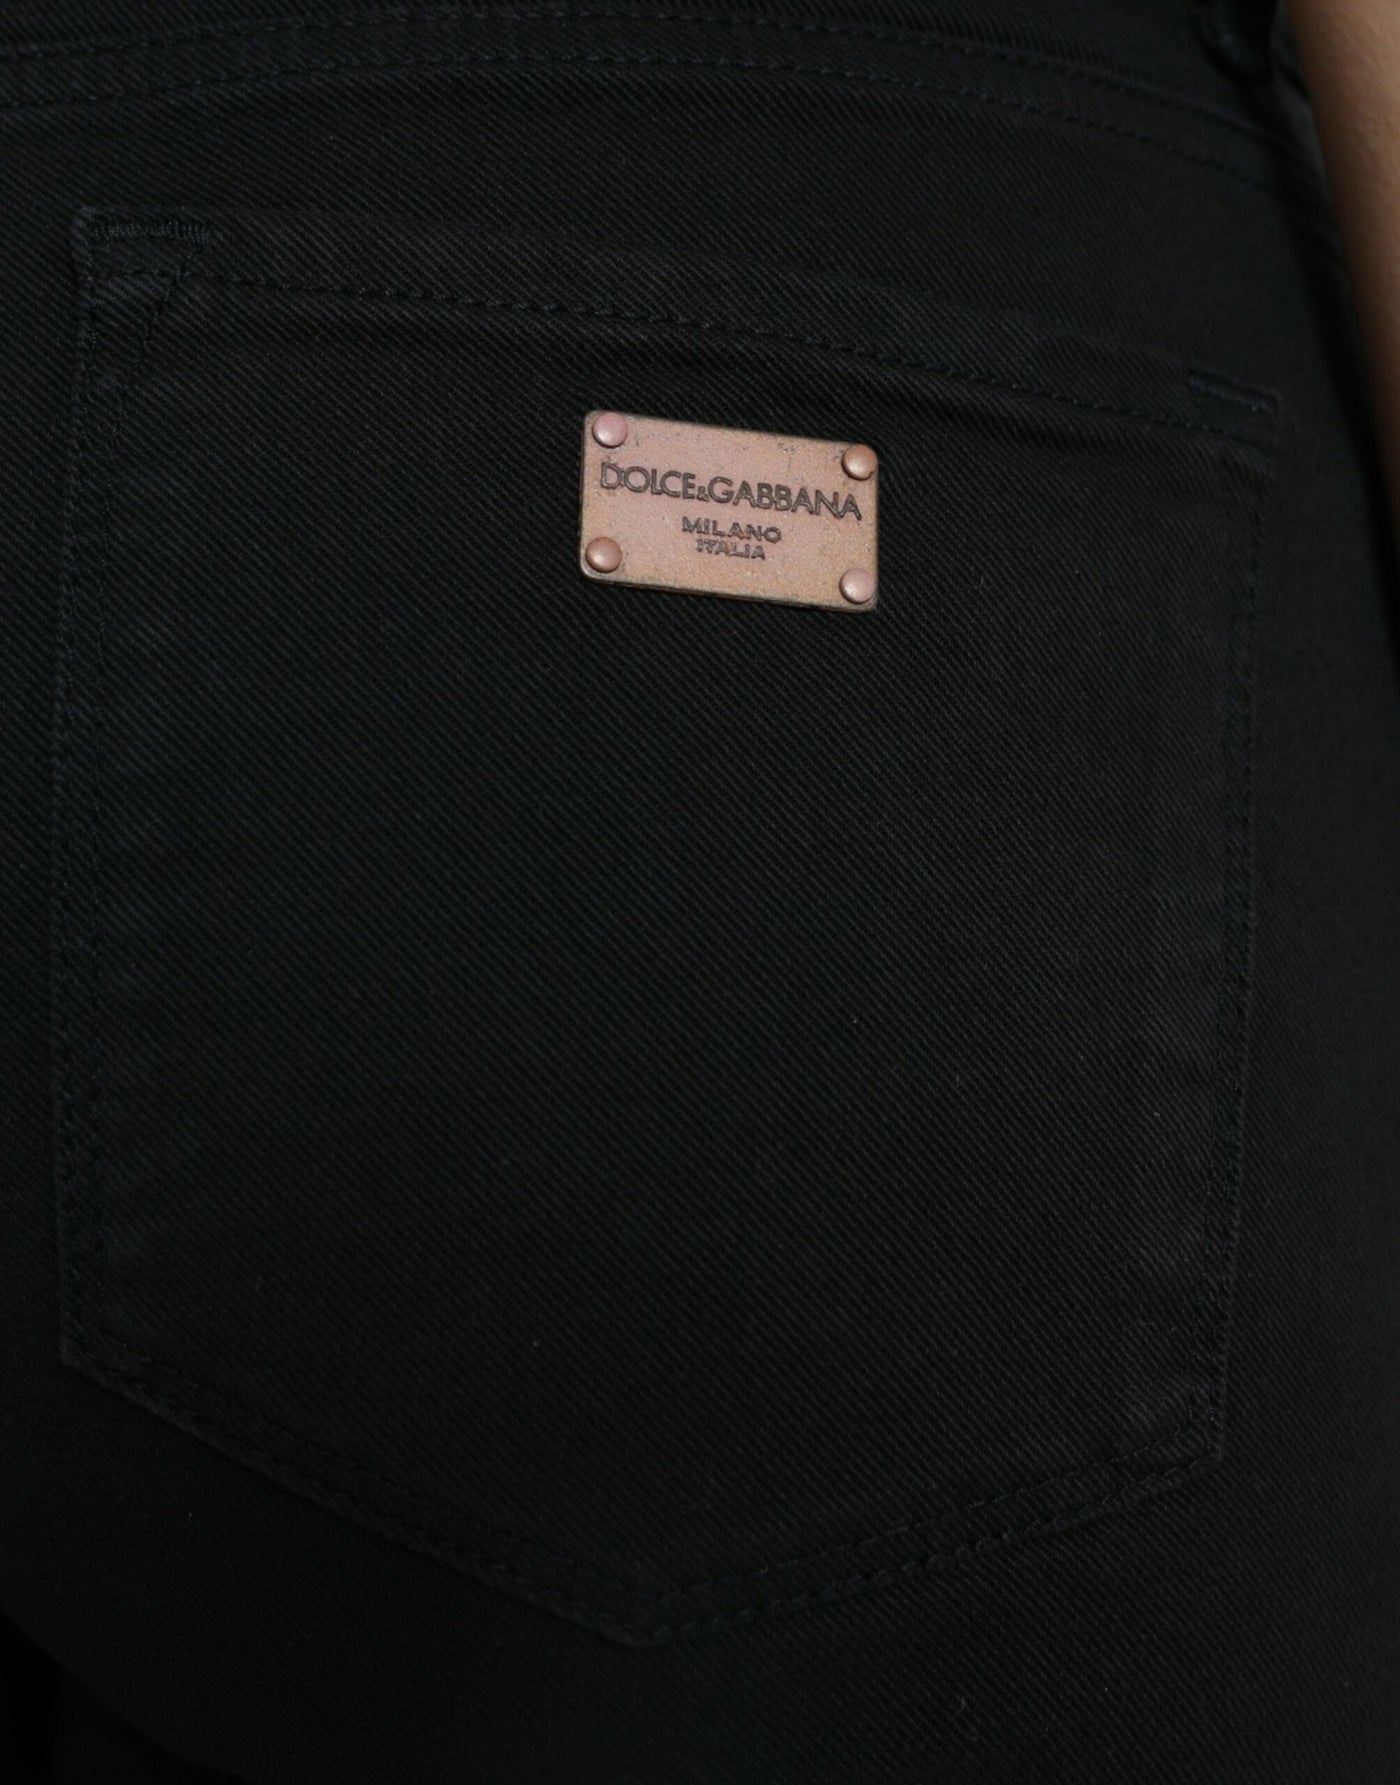 Dolce & Gabbana Black Cotton Mid Waist Skinny Denim Jeans